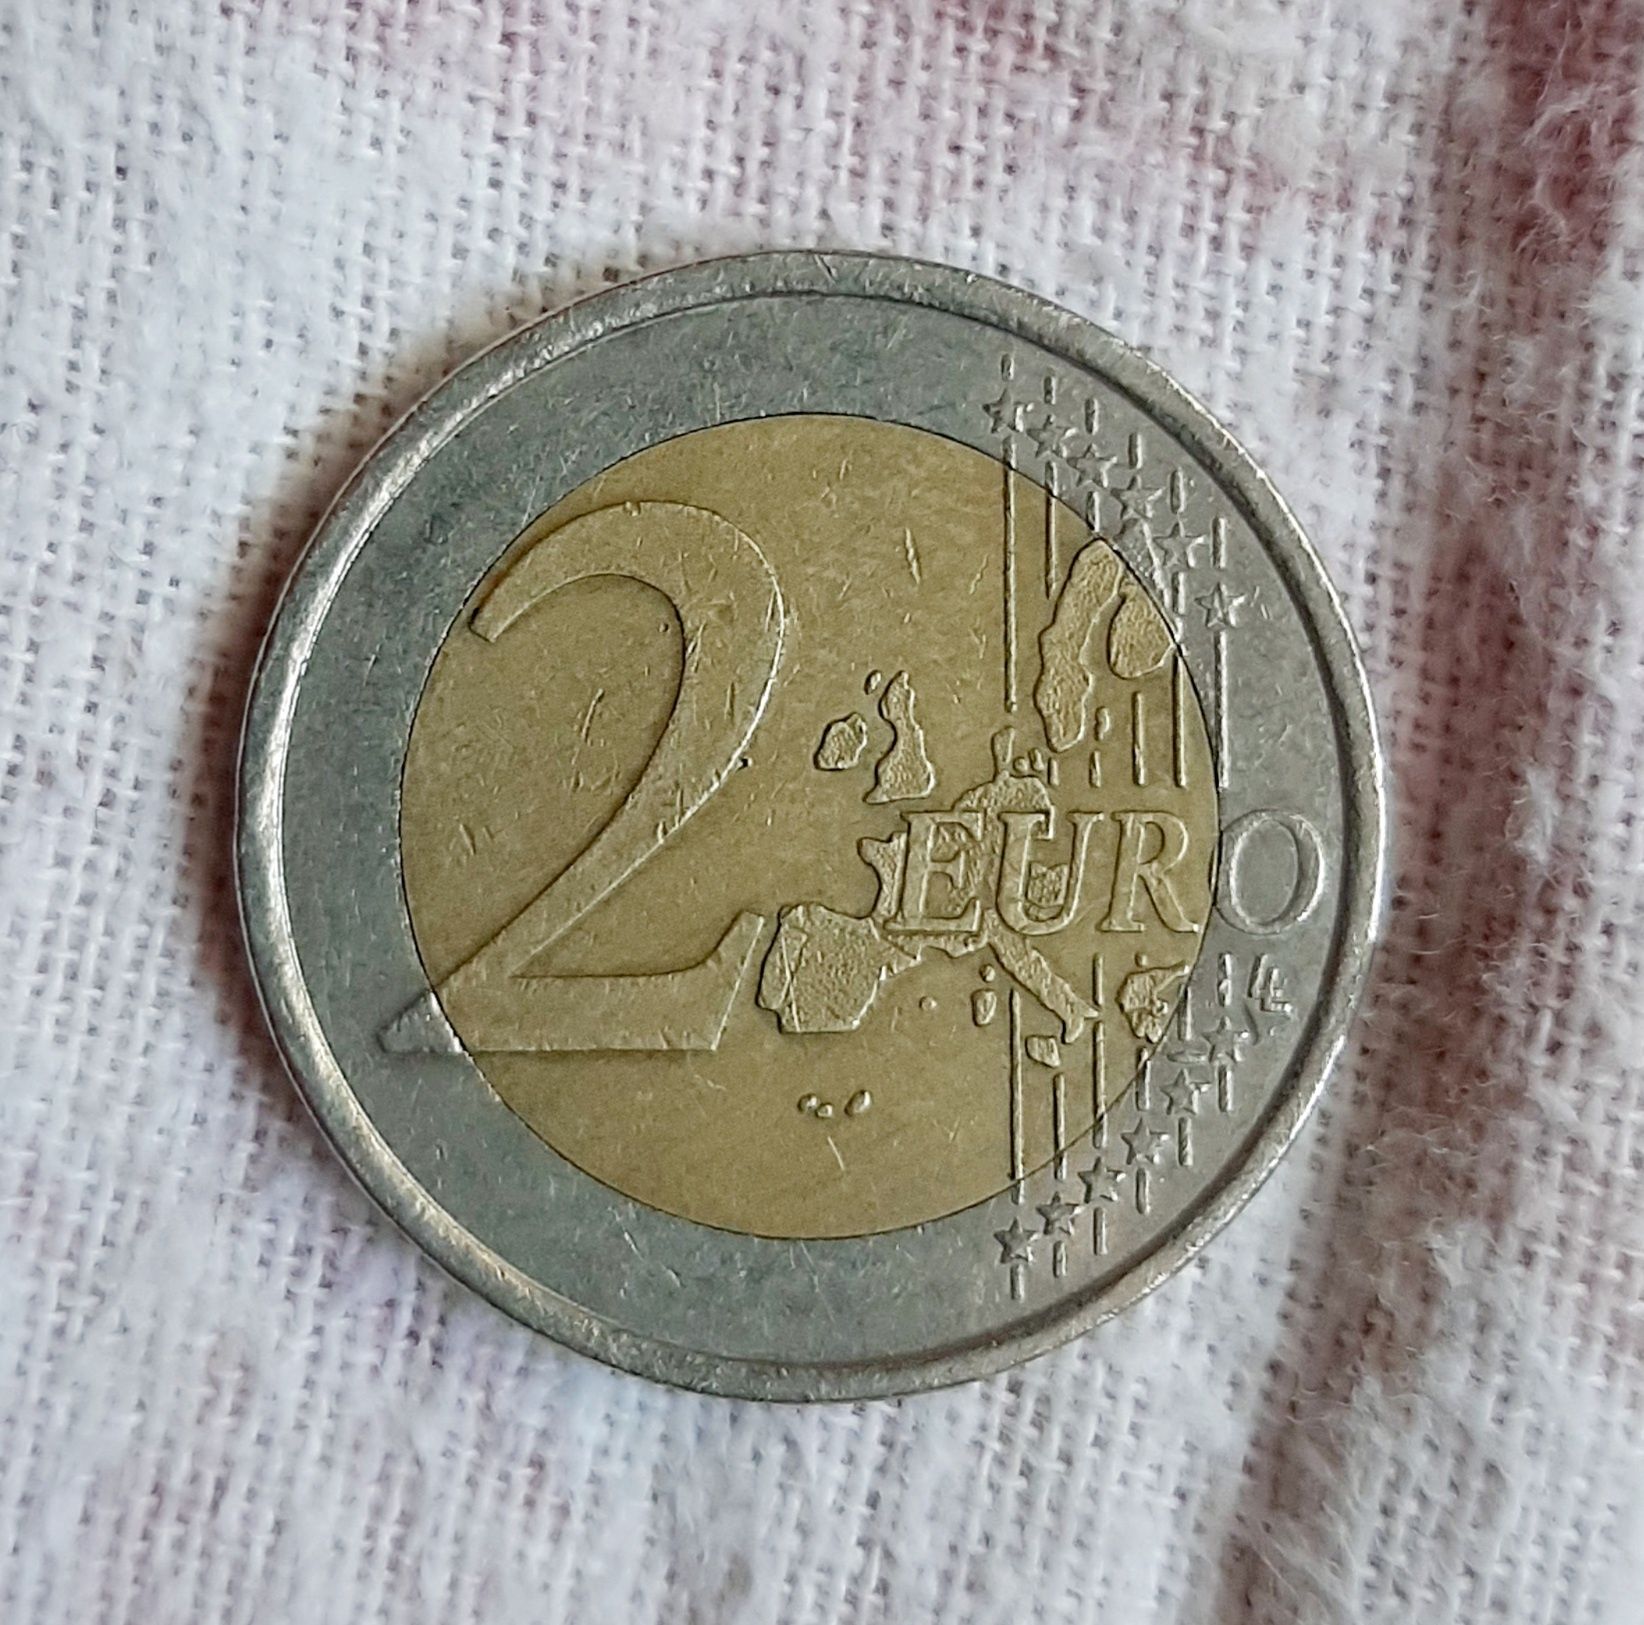 Moeda Finlândia 2€ 2004